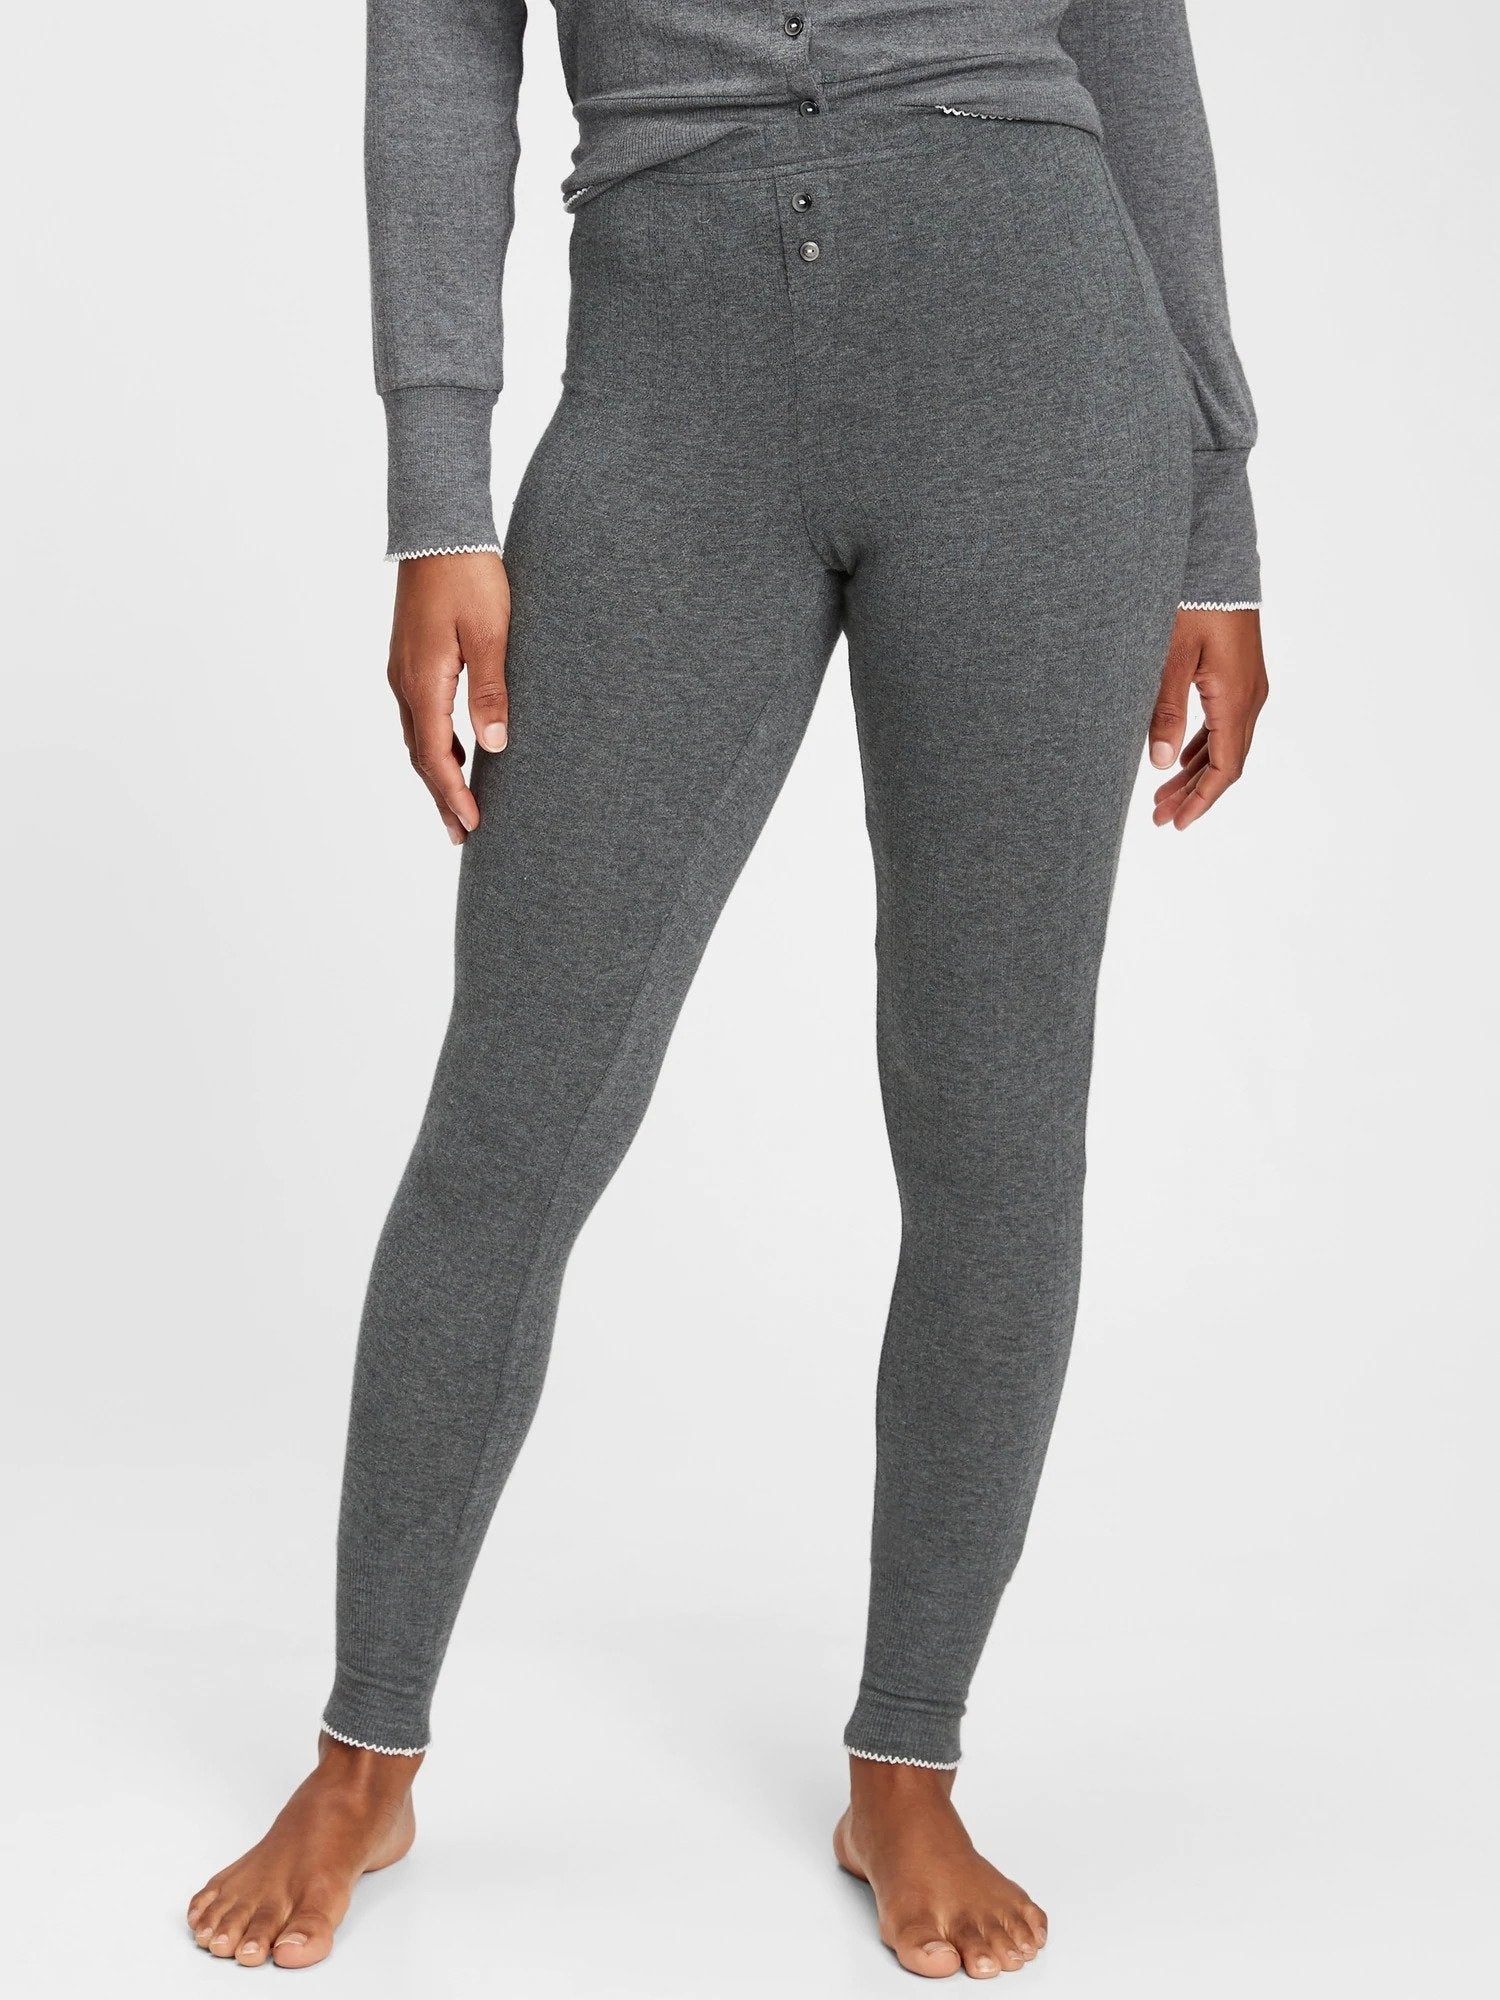 Model wearing grey leggings